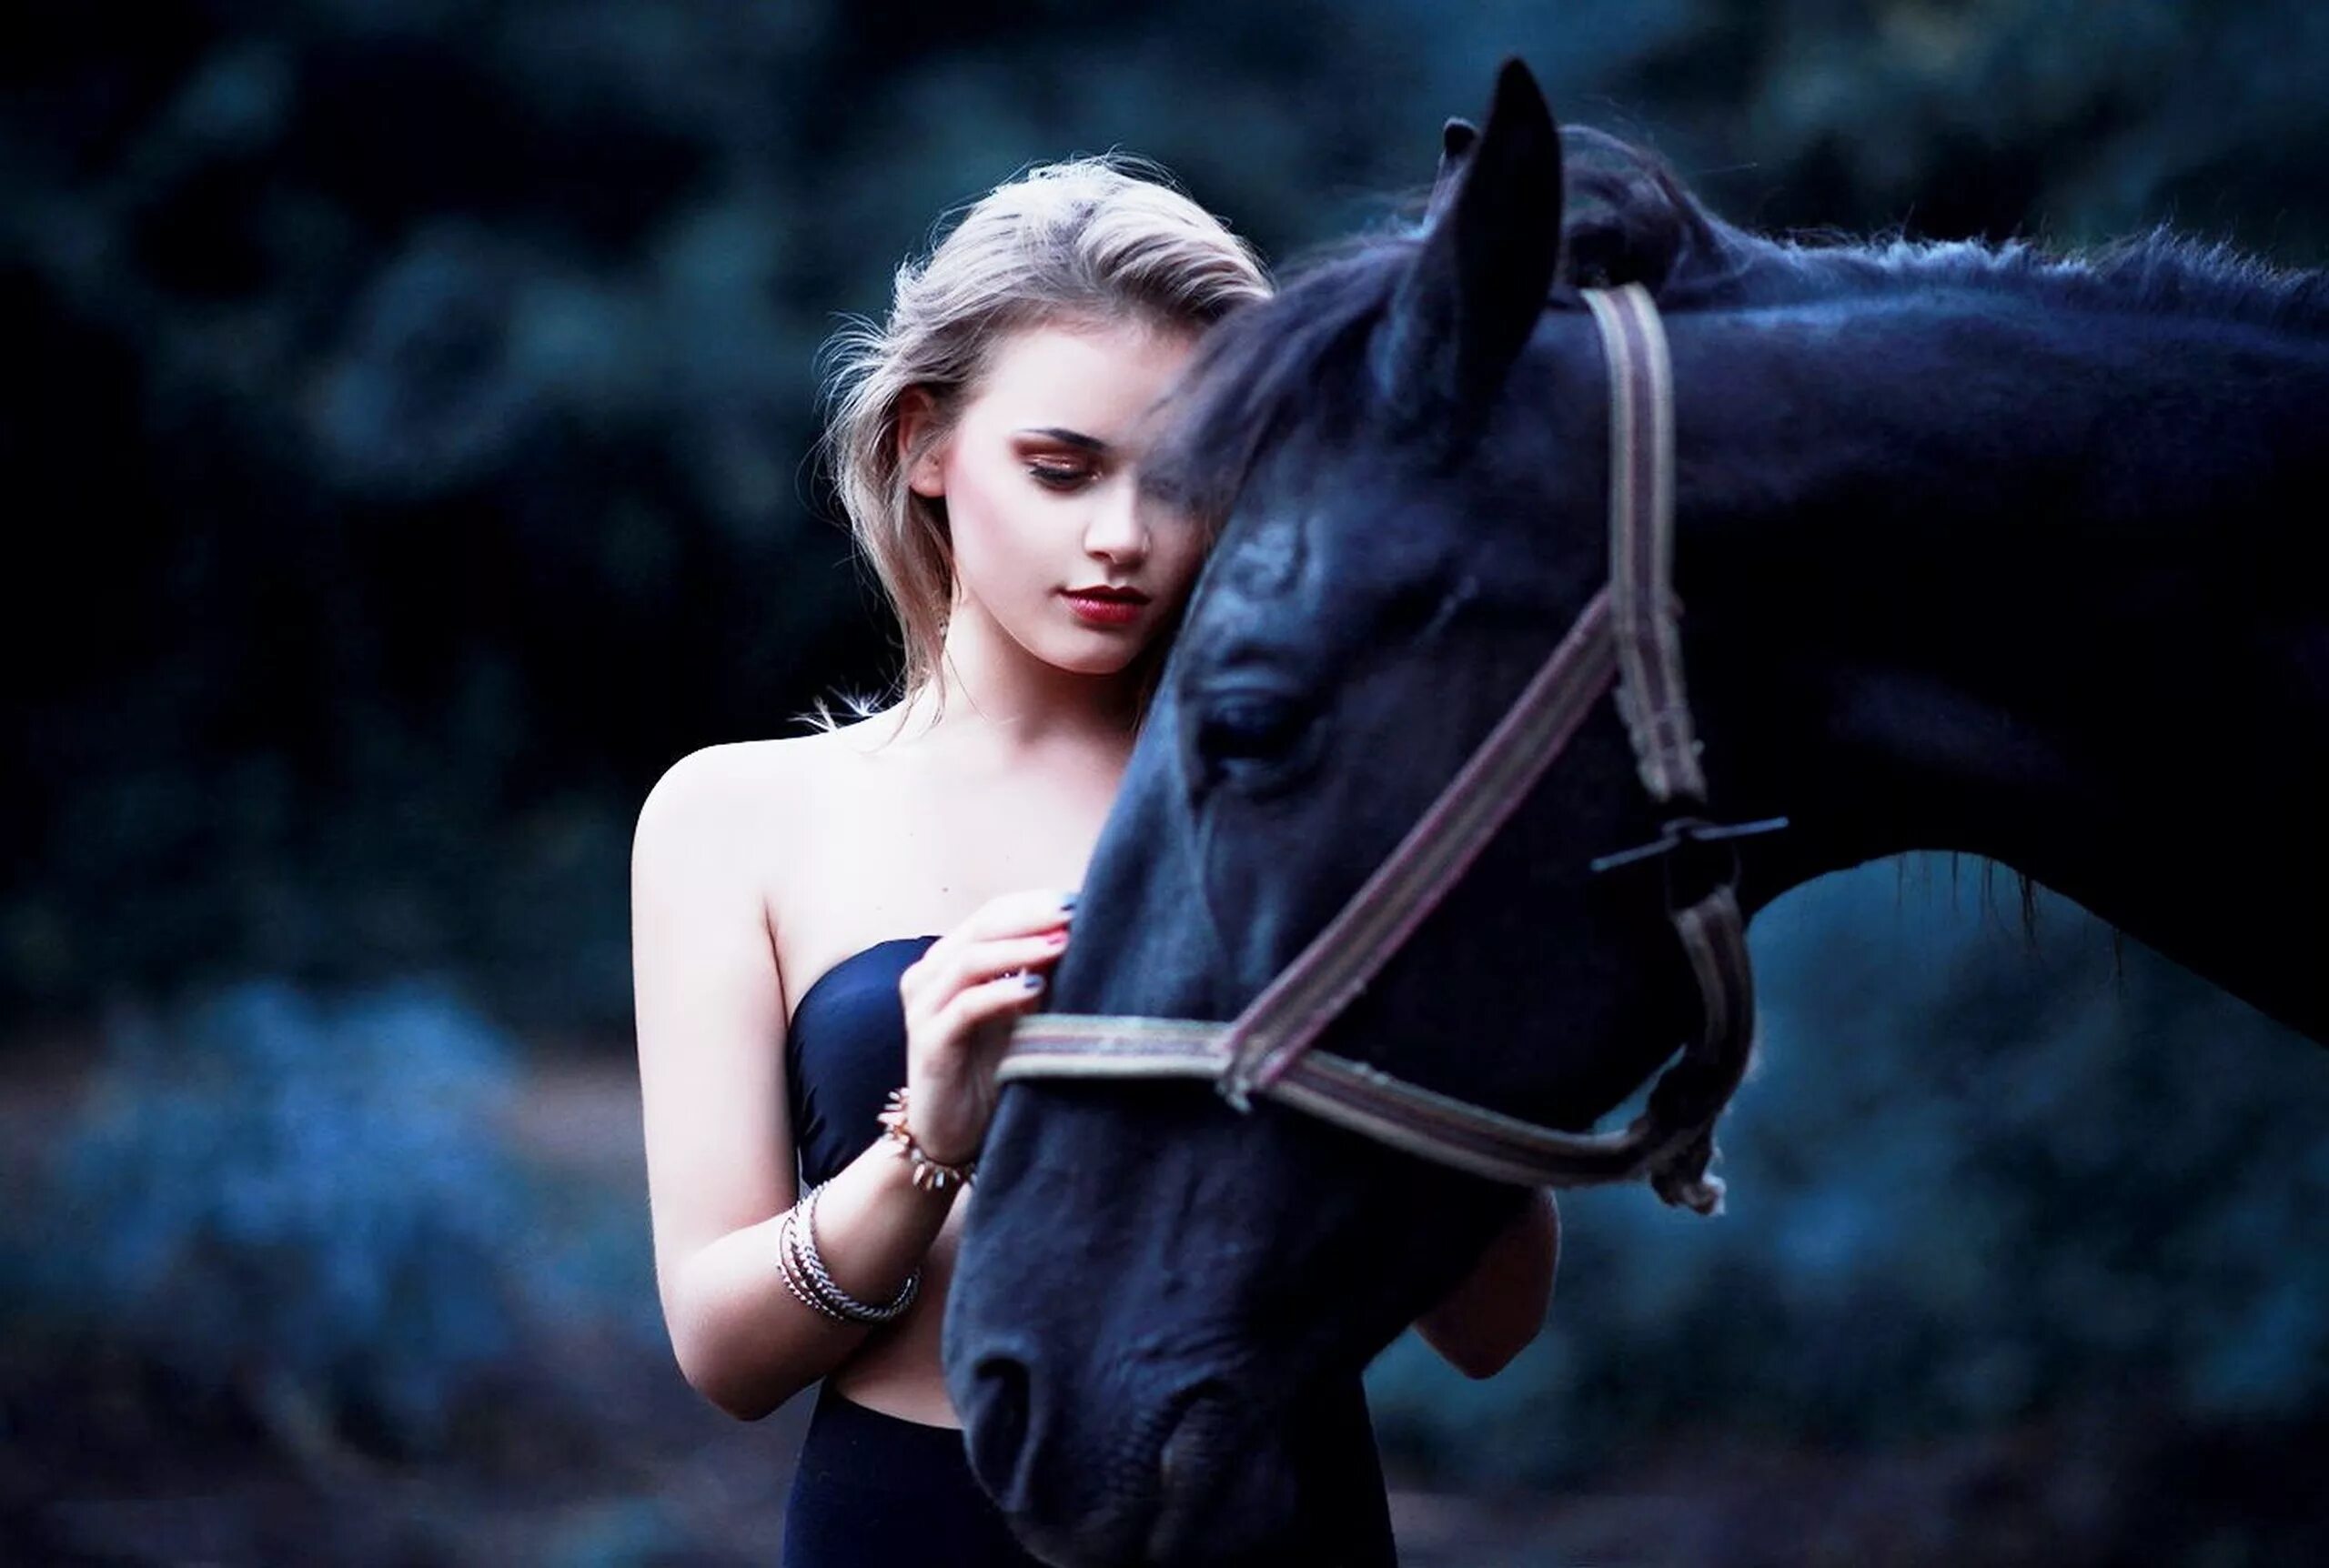 Девки и лошади. Девушка на коне. Красивая девушка на лошади. Фотосессия с лошадьми. Фотосет с лошадью.